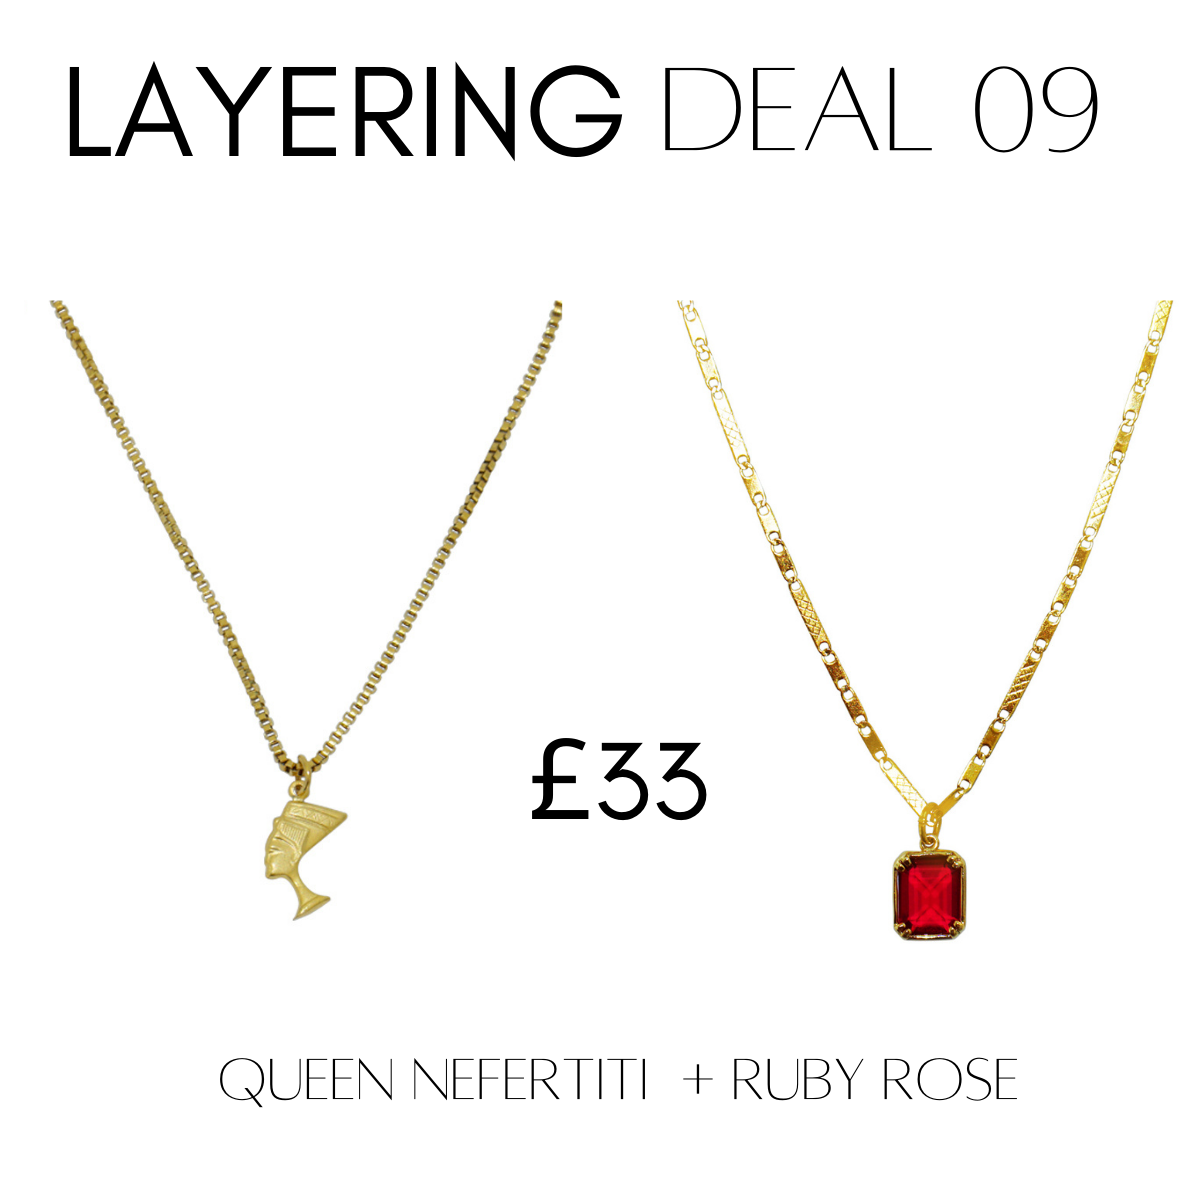 Layering deal #9 Queen Nefertiti + Ruby Rose